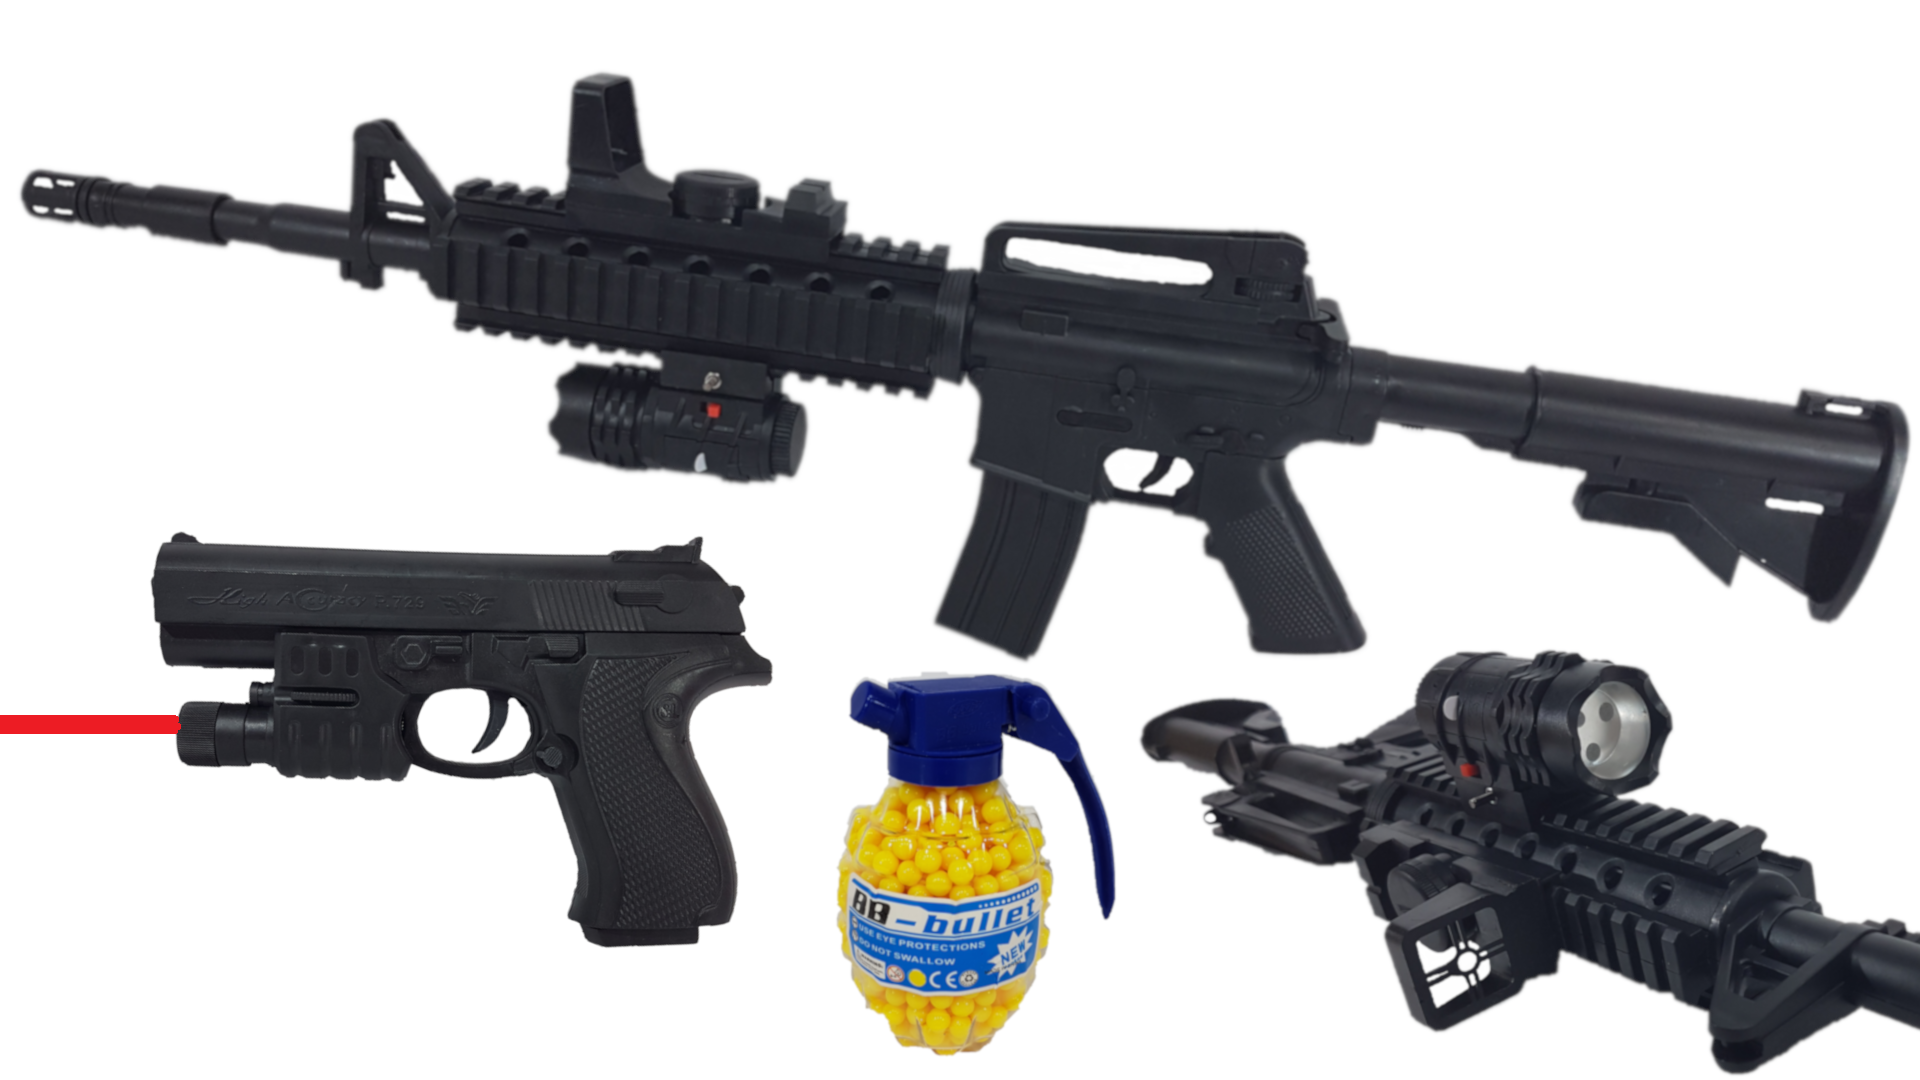 Karabin M4A1 Snajperka Na Kulki z Niebieską Latarką + Pistolet z Laserem + Granat TOMDORIX